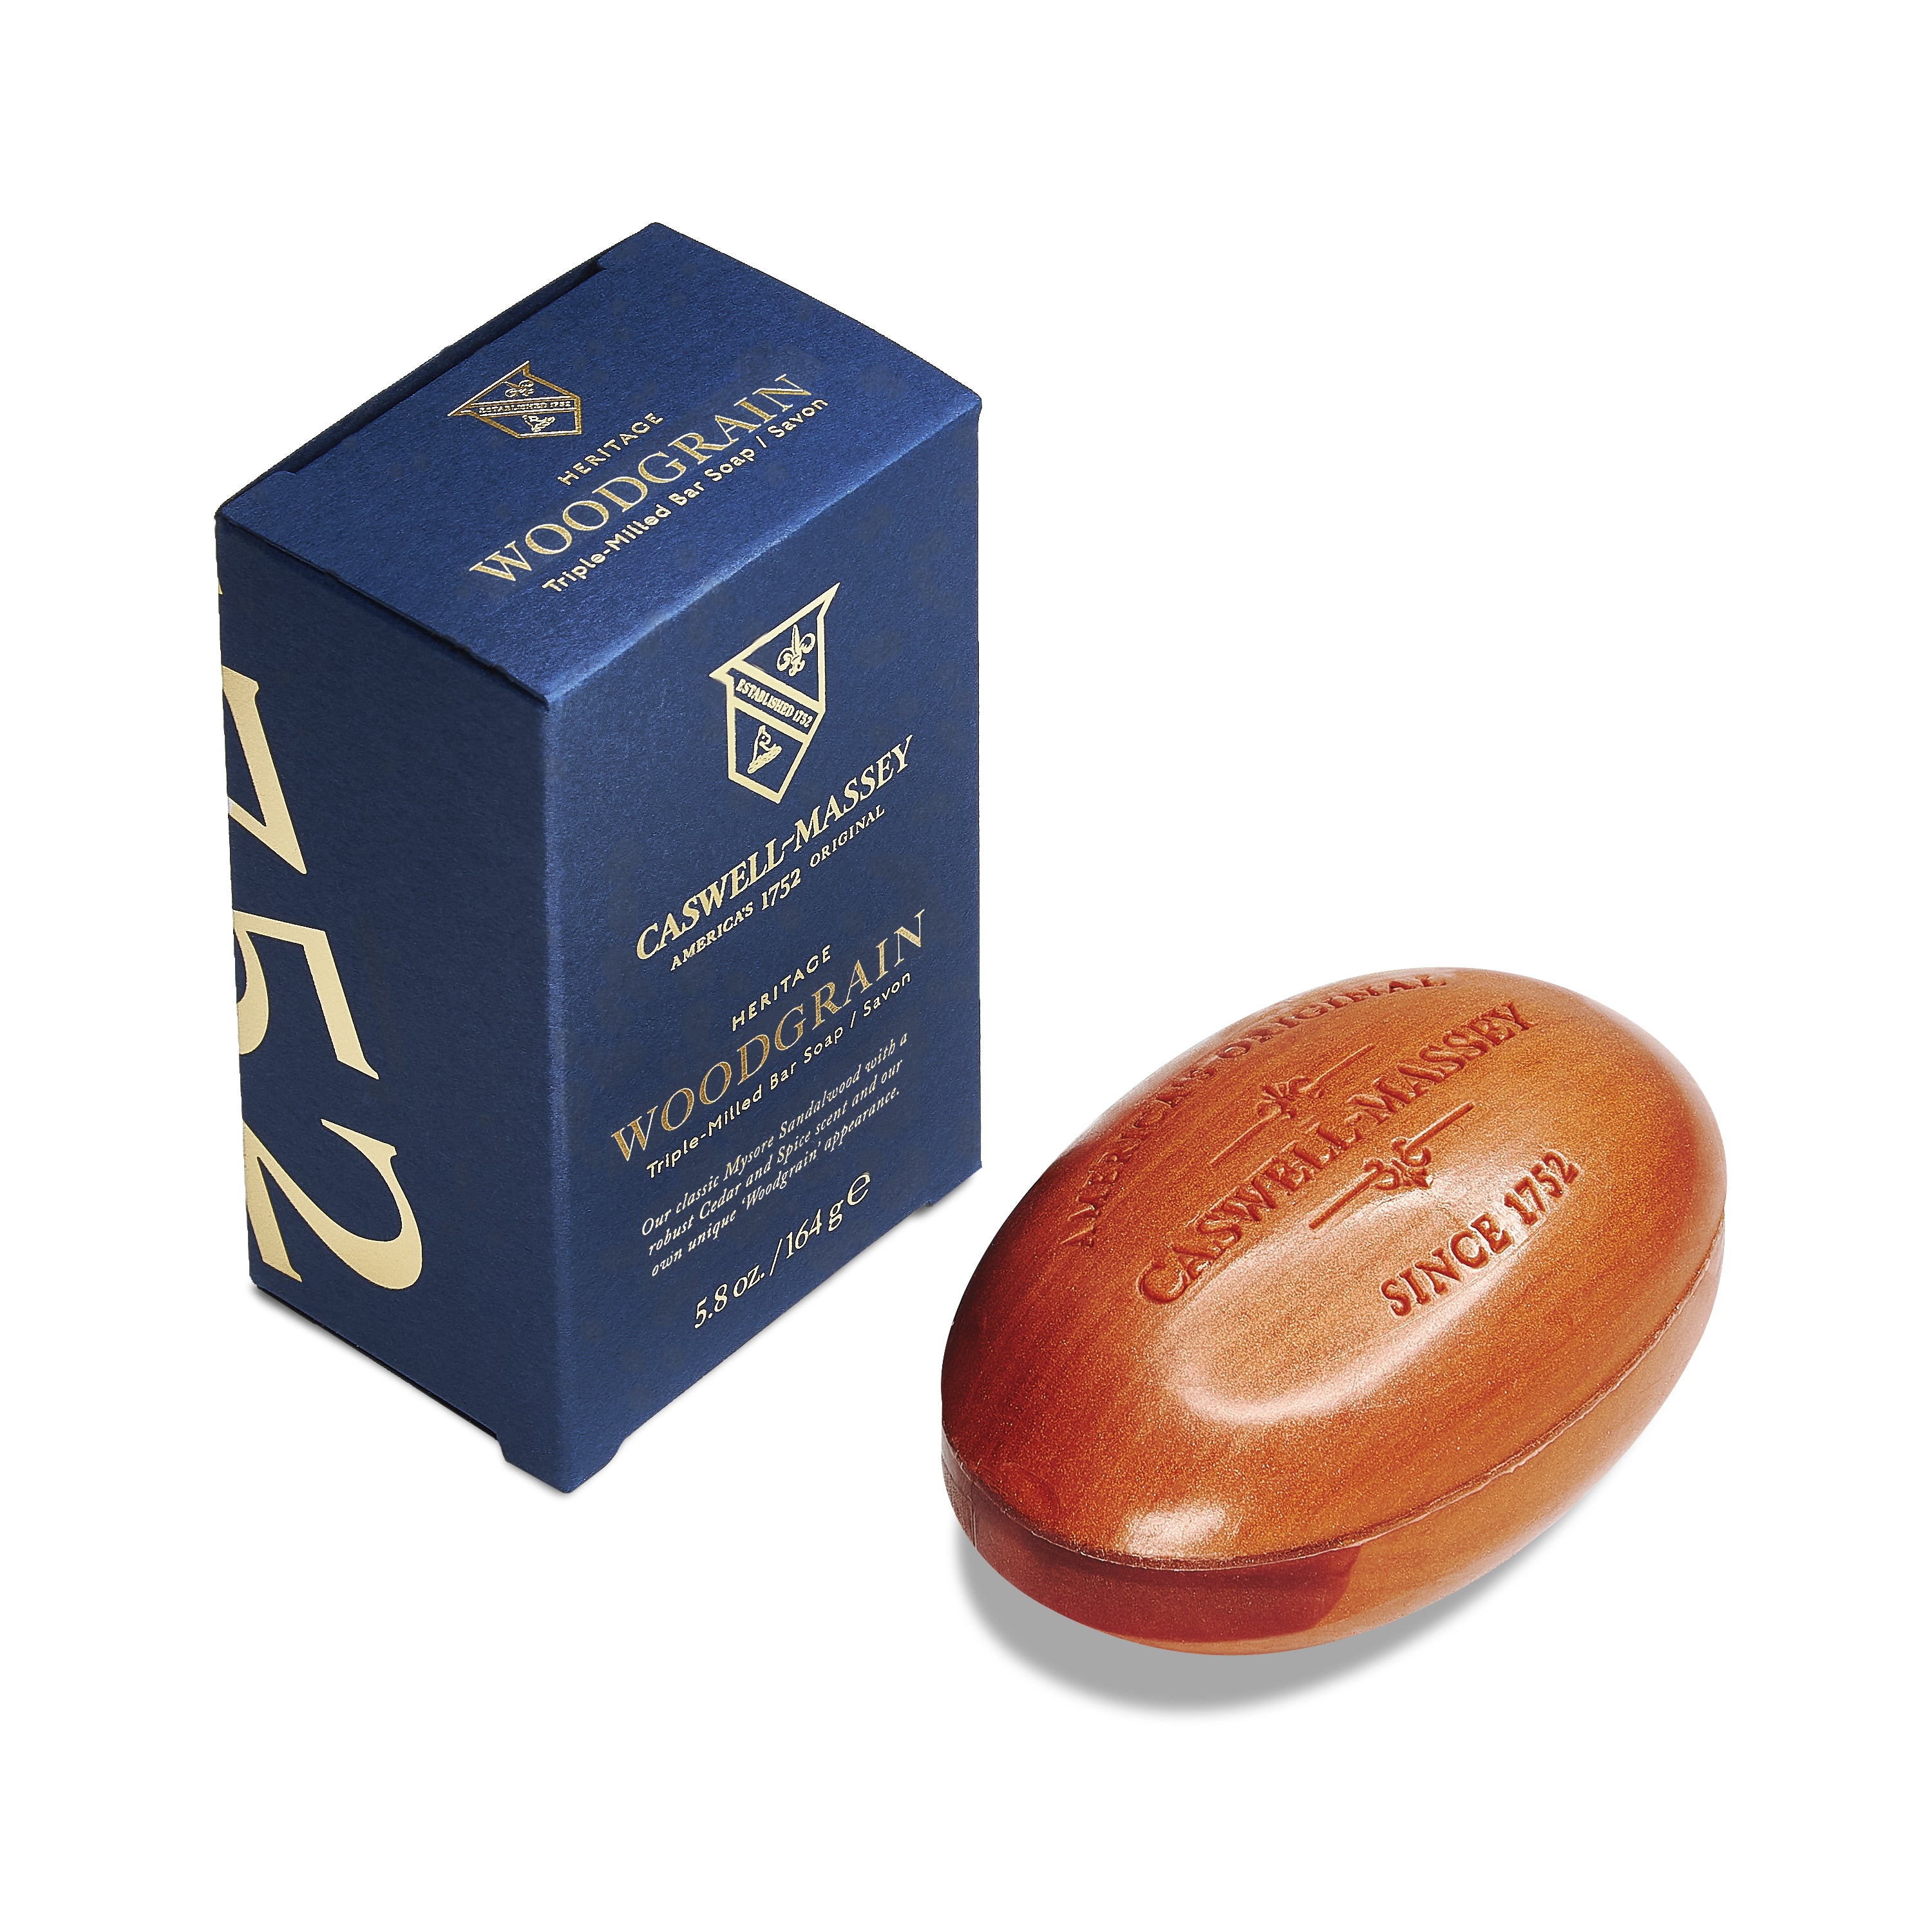 Caswell-Massey® Heritage Woodgrain Sandalwood Bar Soap shown with navy blue box